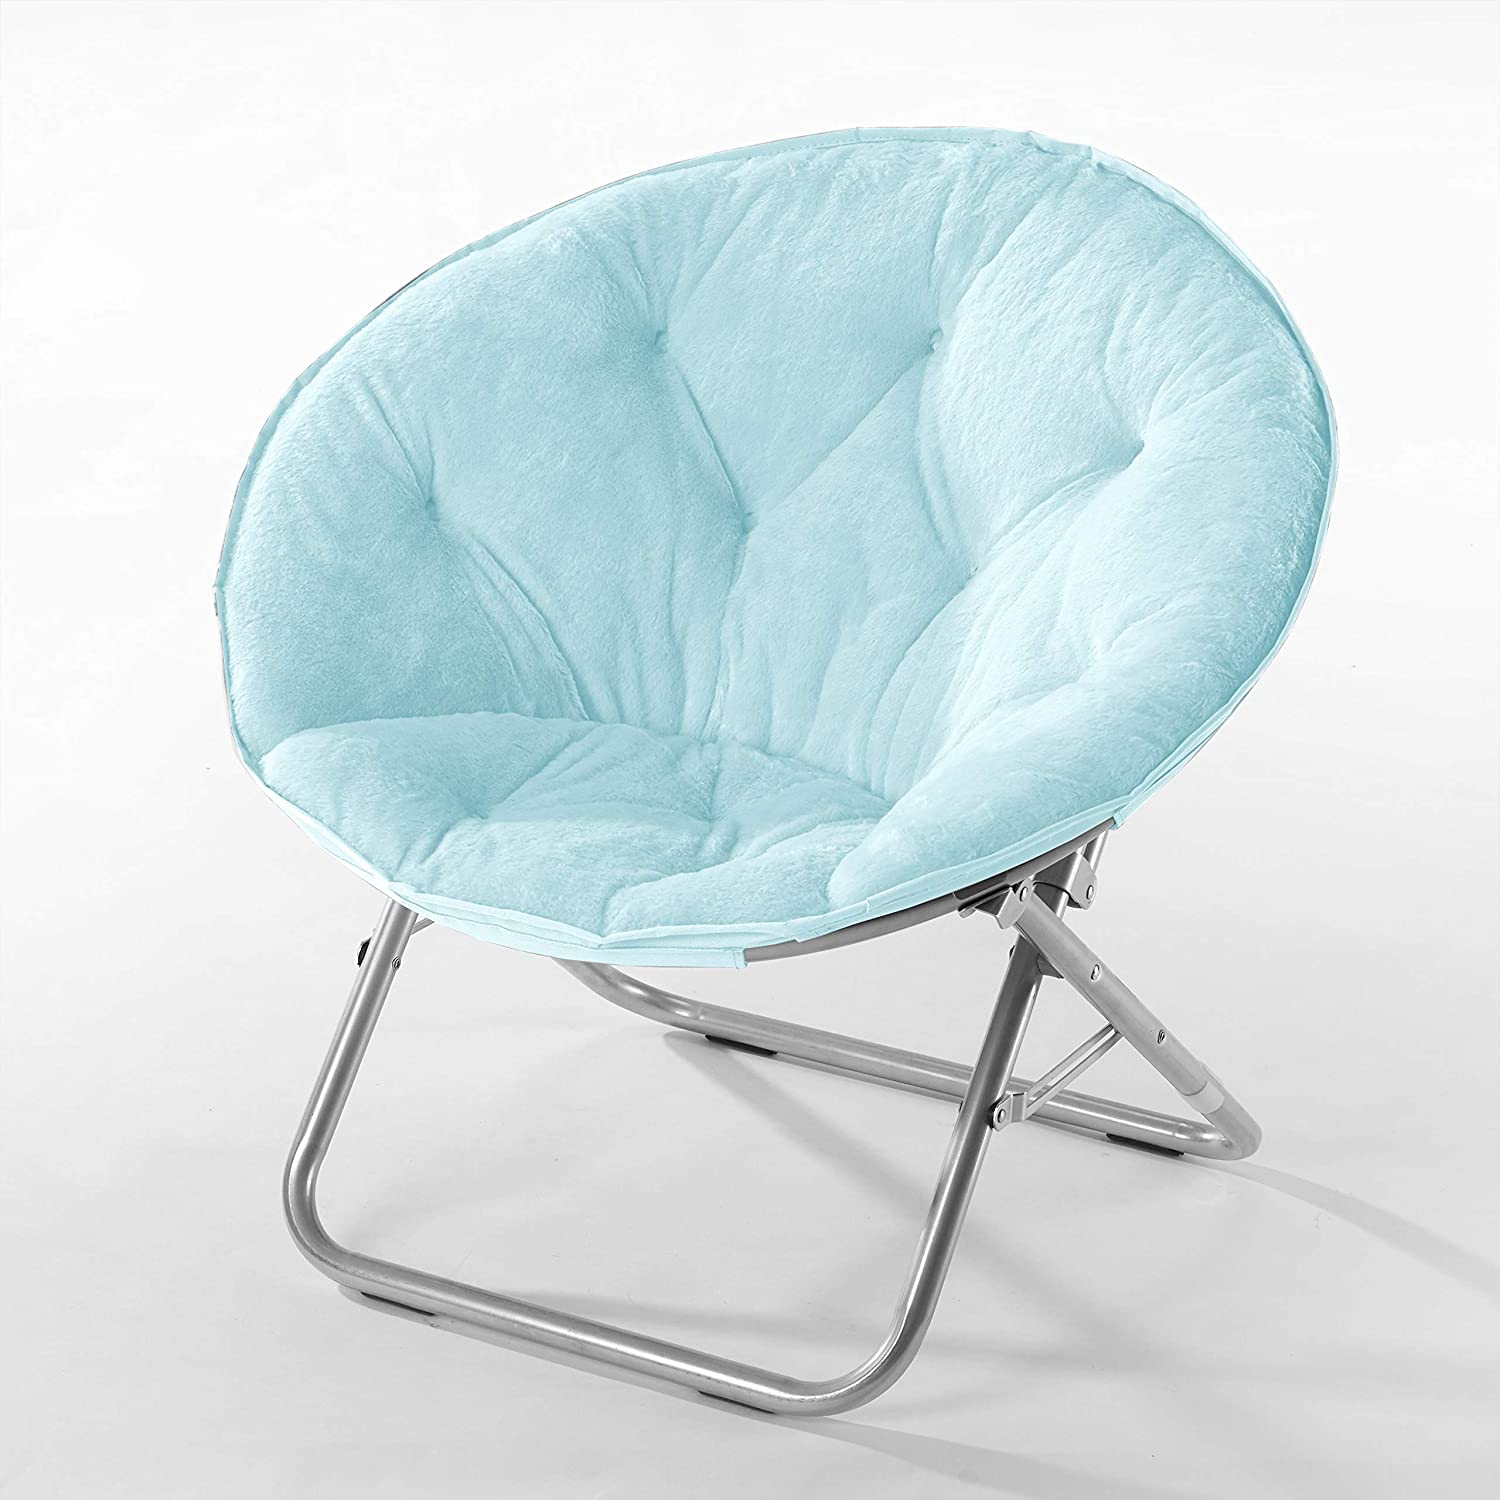 K658107 Urban Shop Faux Fur Folding Saucer Chair with Metal Frame 30 Frame Aqua Blue